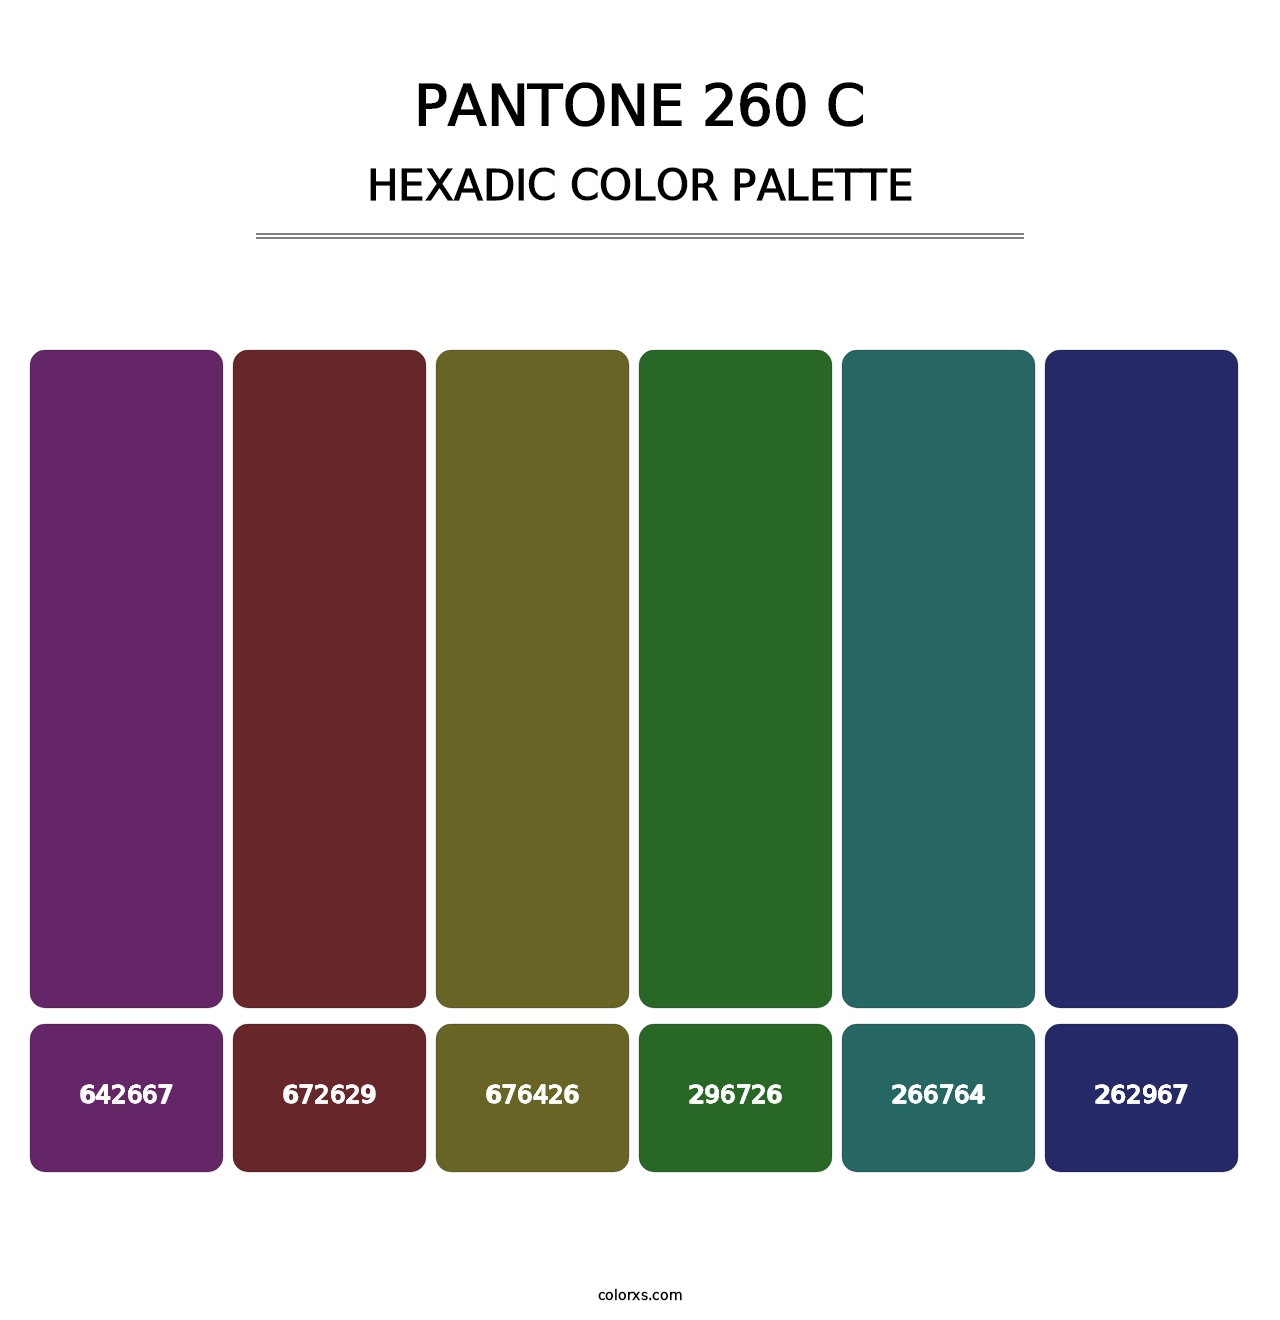 PANTONE 260 C - Hexadic Color Palette